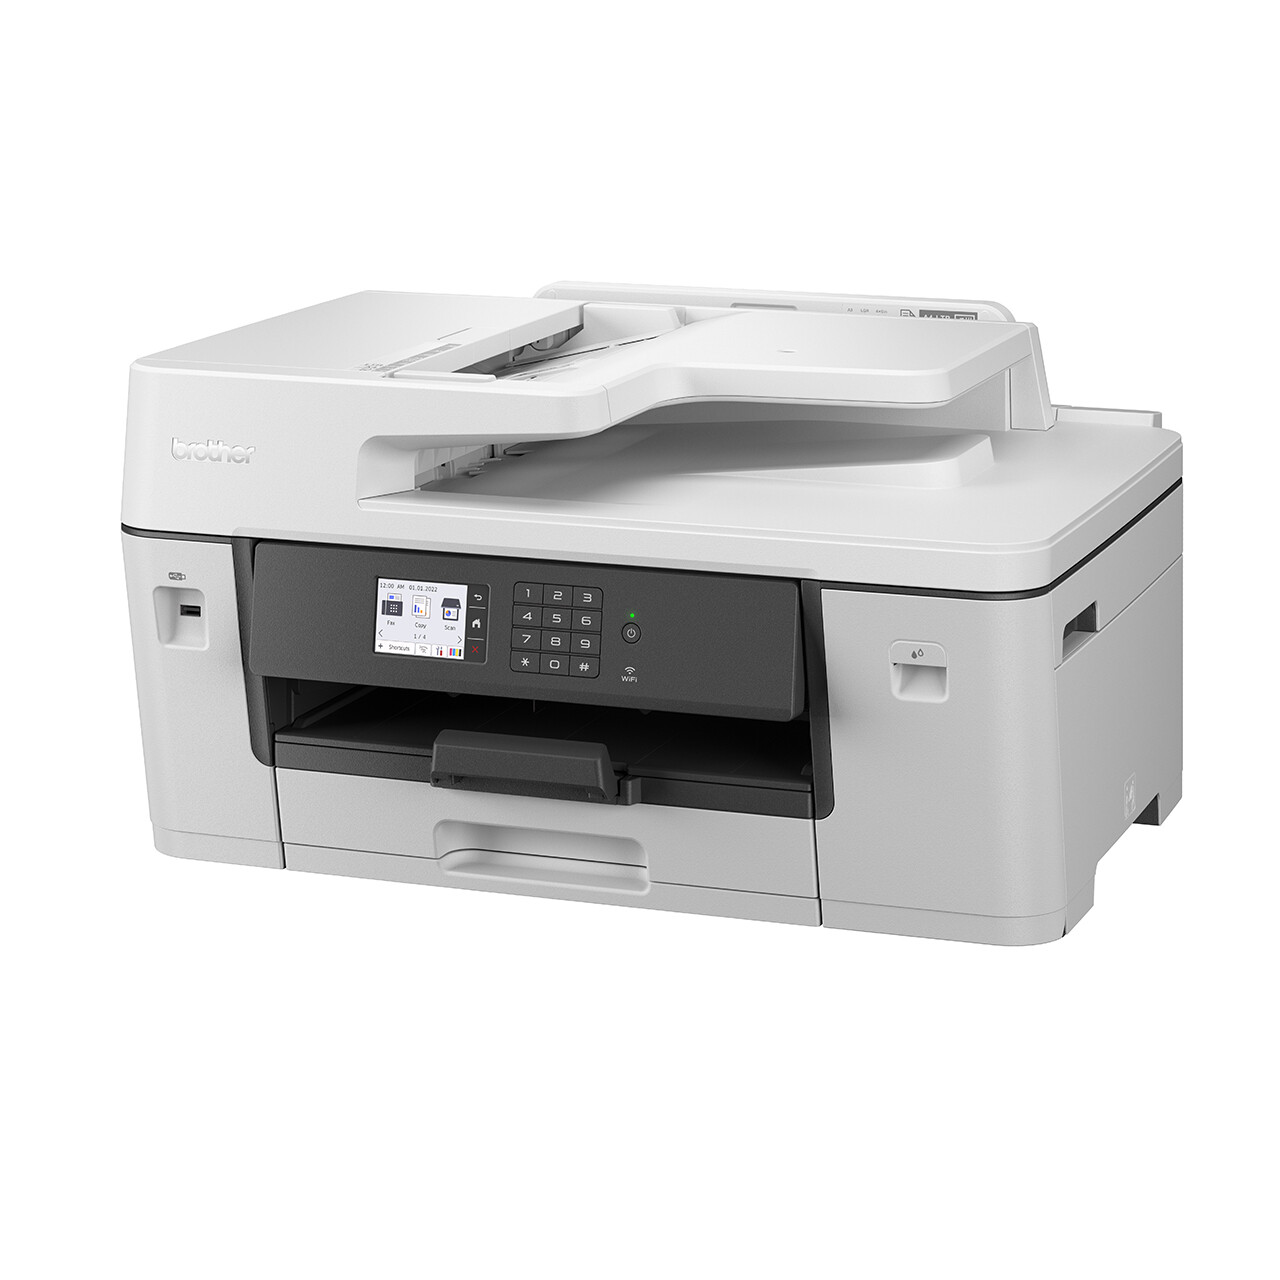 Brother MFC-J3540DW Inkjet Printer